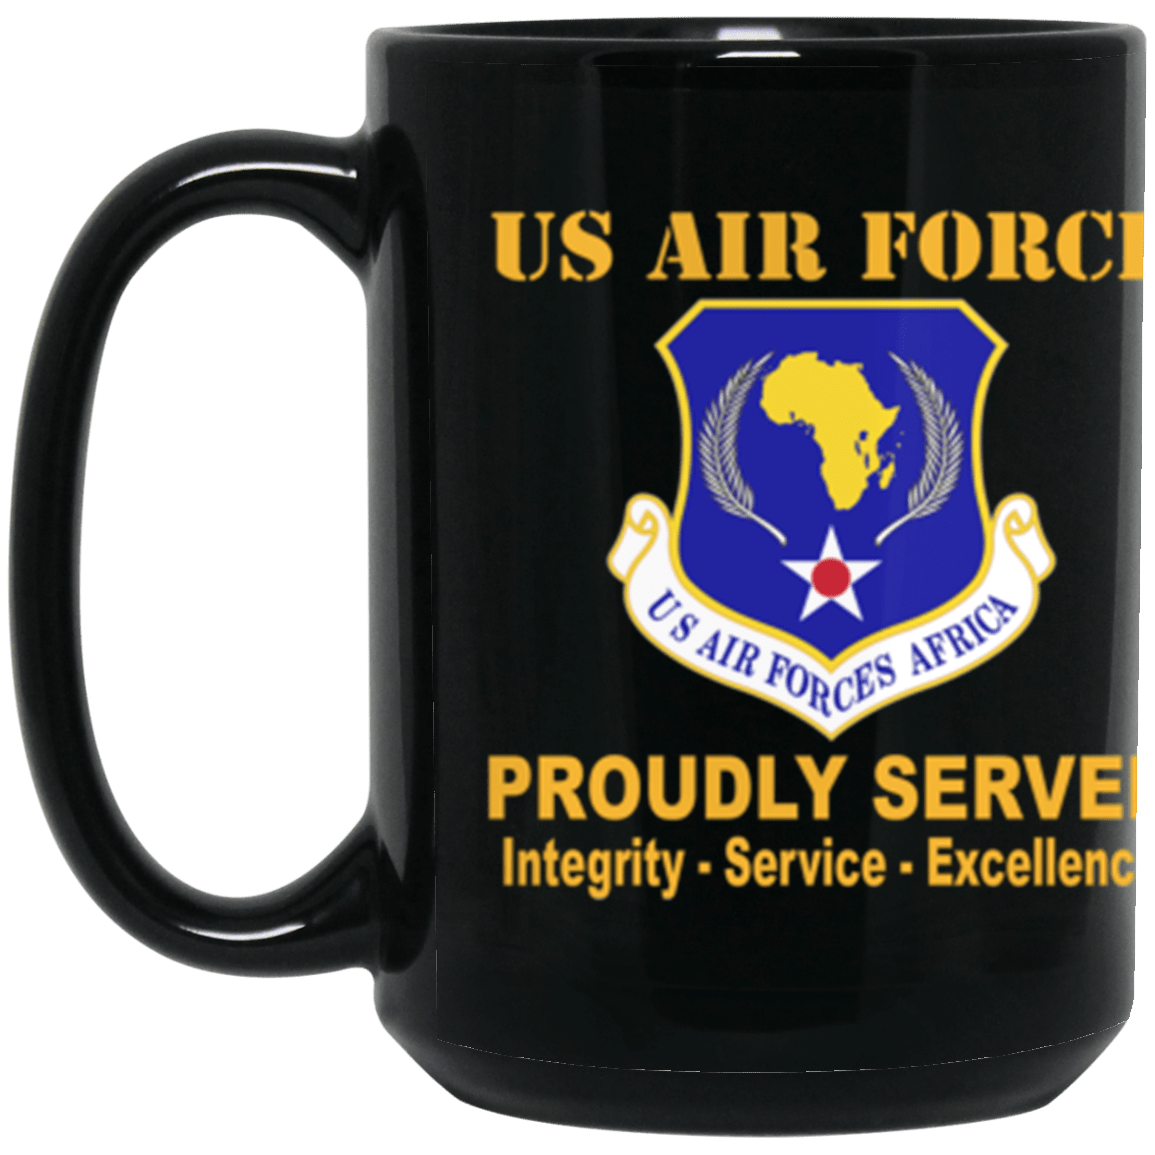 US Air Force Air Force Global Strike Command Proudly Served Core Values 15 oz. Black Mug-Mug-USAF-Veterans Nation